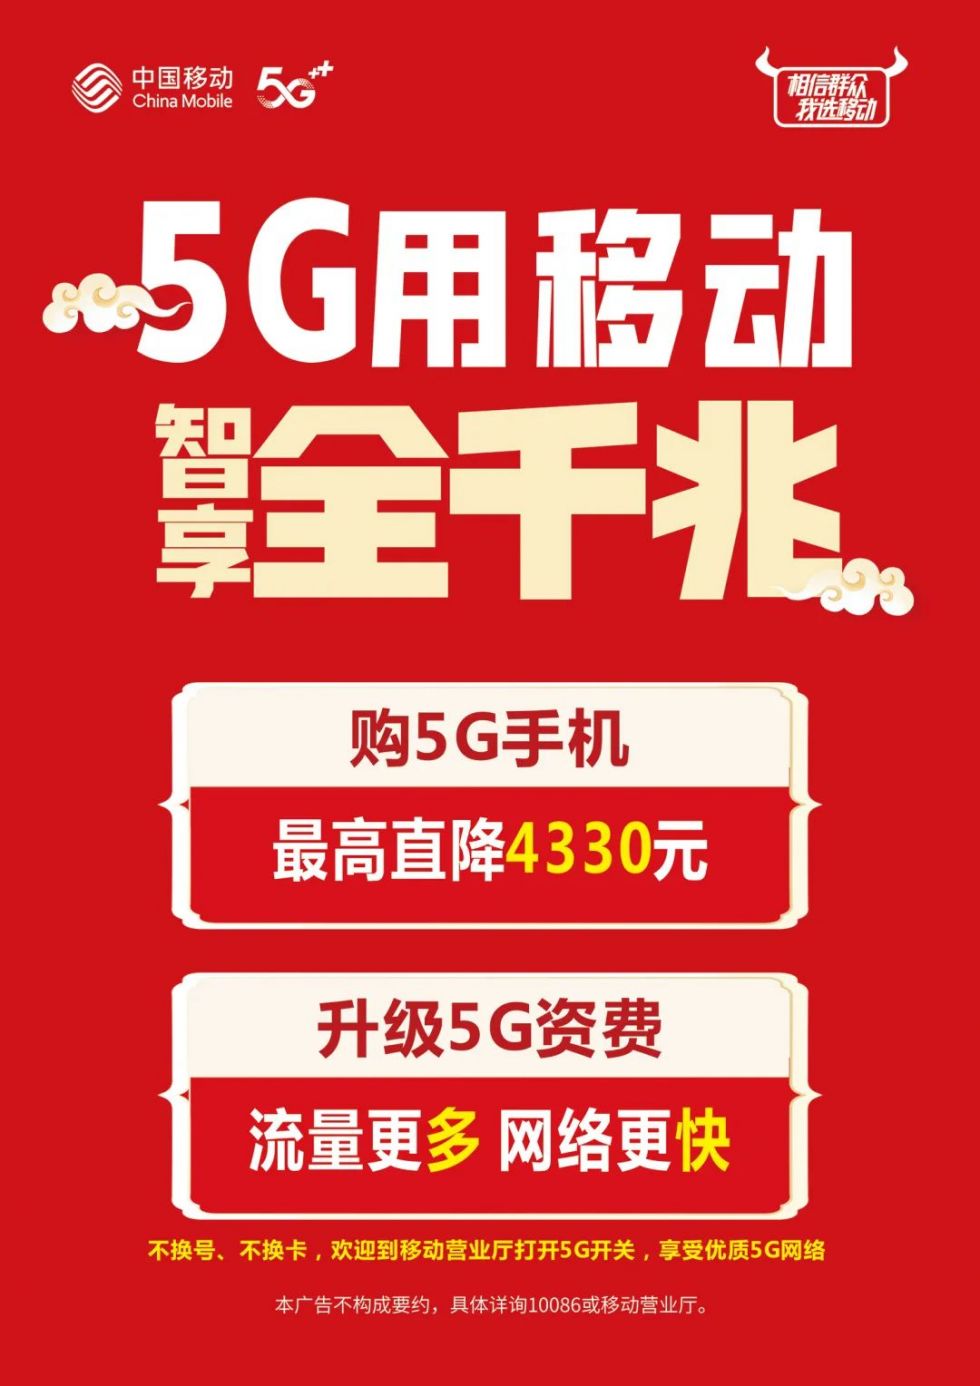 5G 时代，如何挑选优质号码？了解这些特点和策略  第4张